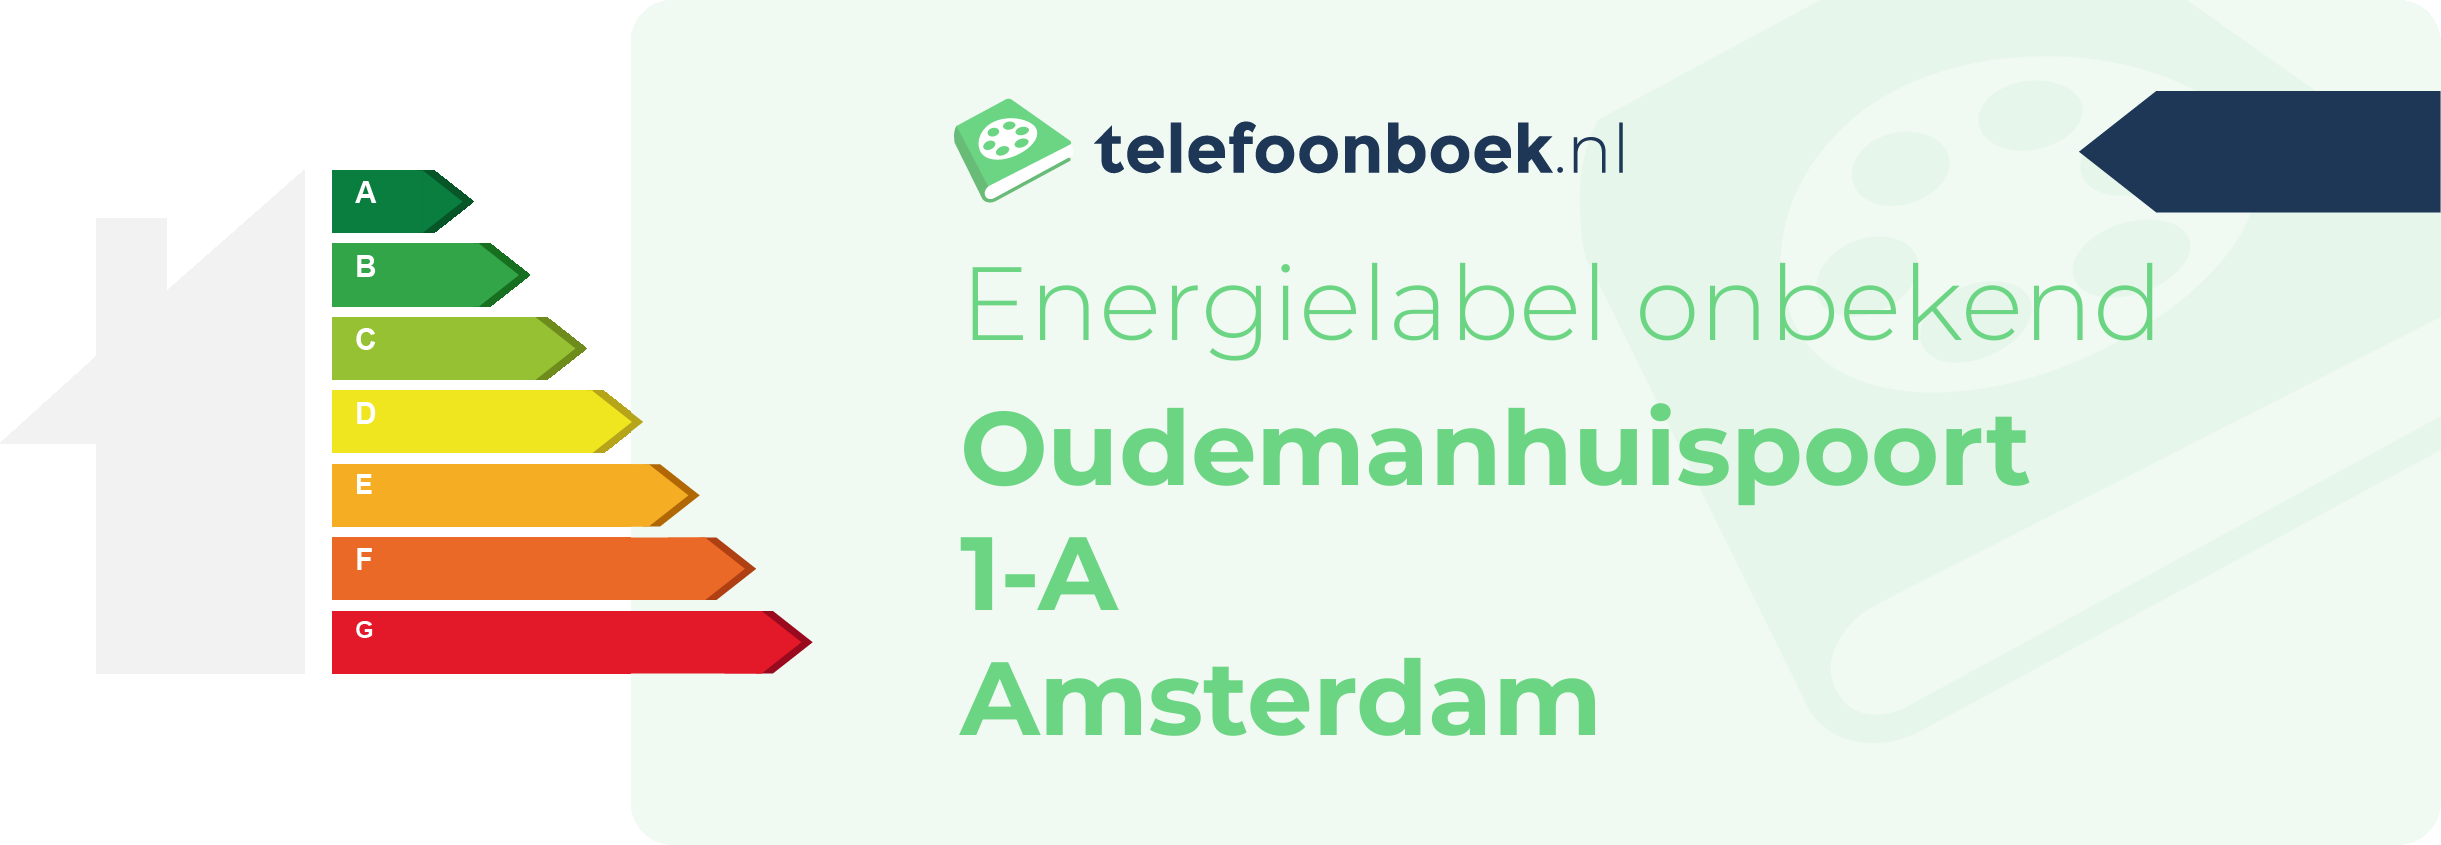 Energielabel Oudemanhuispoort 1-A Amsterdam